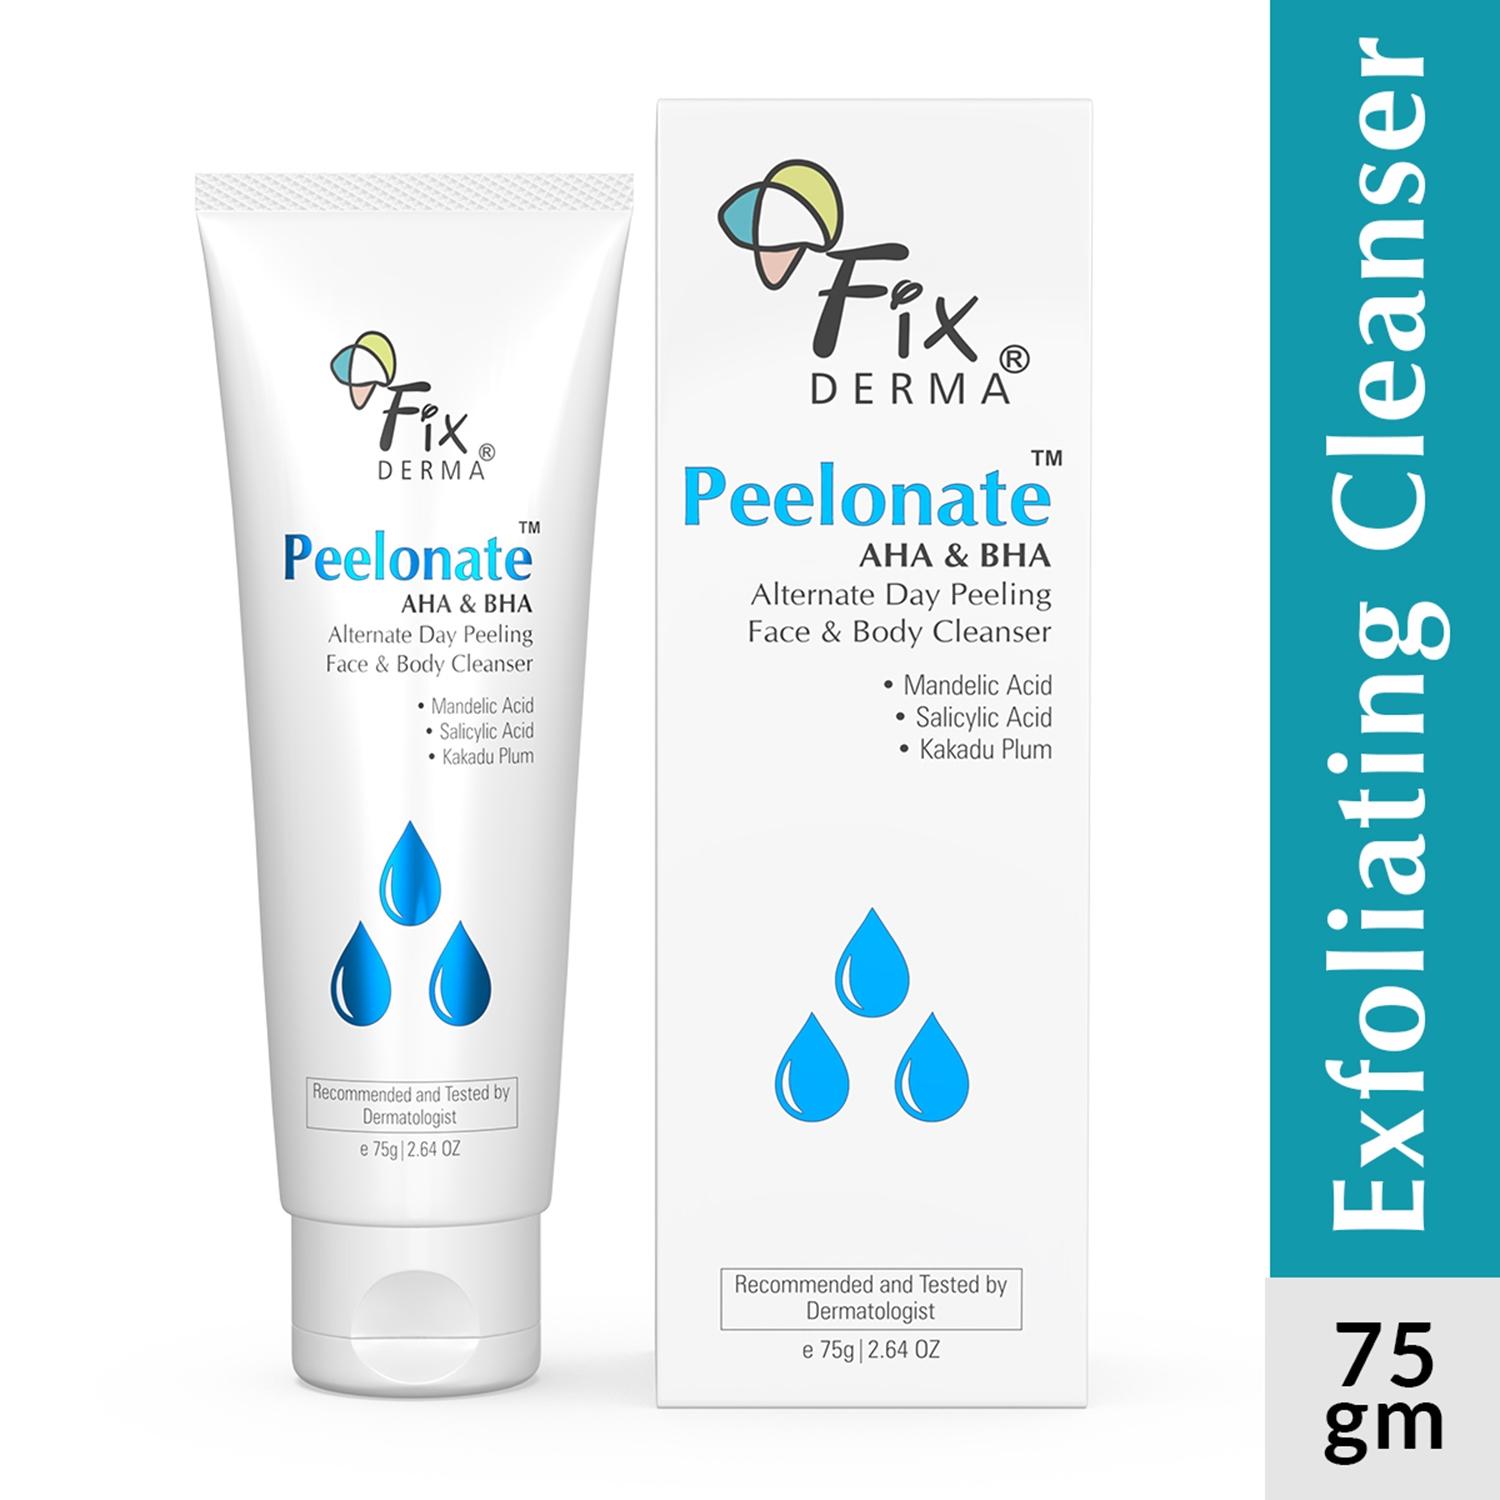 fixderma 2% mandelic acid + 1% salicylic acid peelonate aha & bha face & body cleanser (75g)